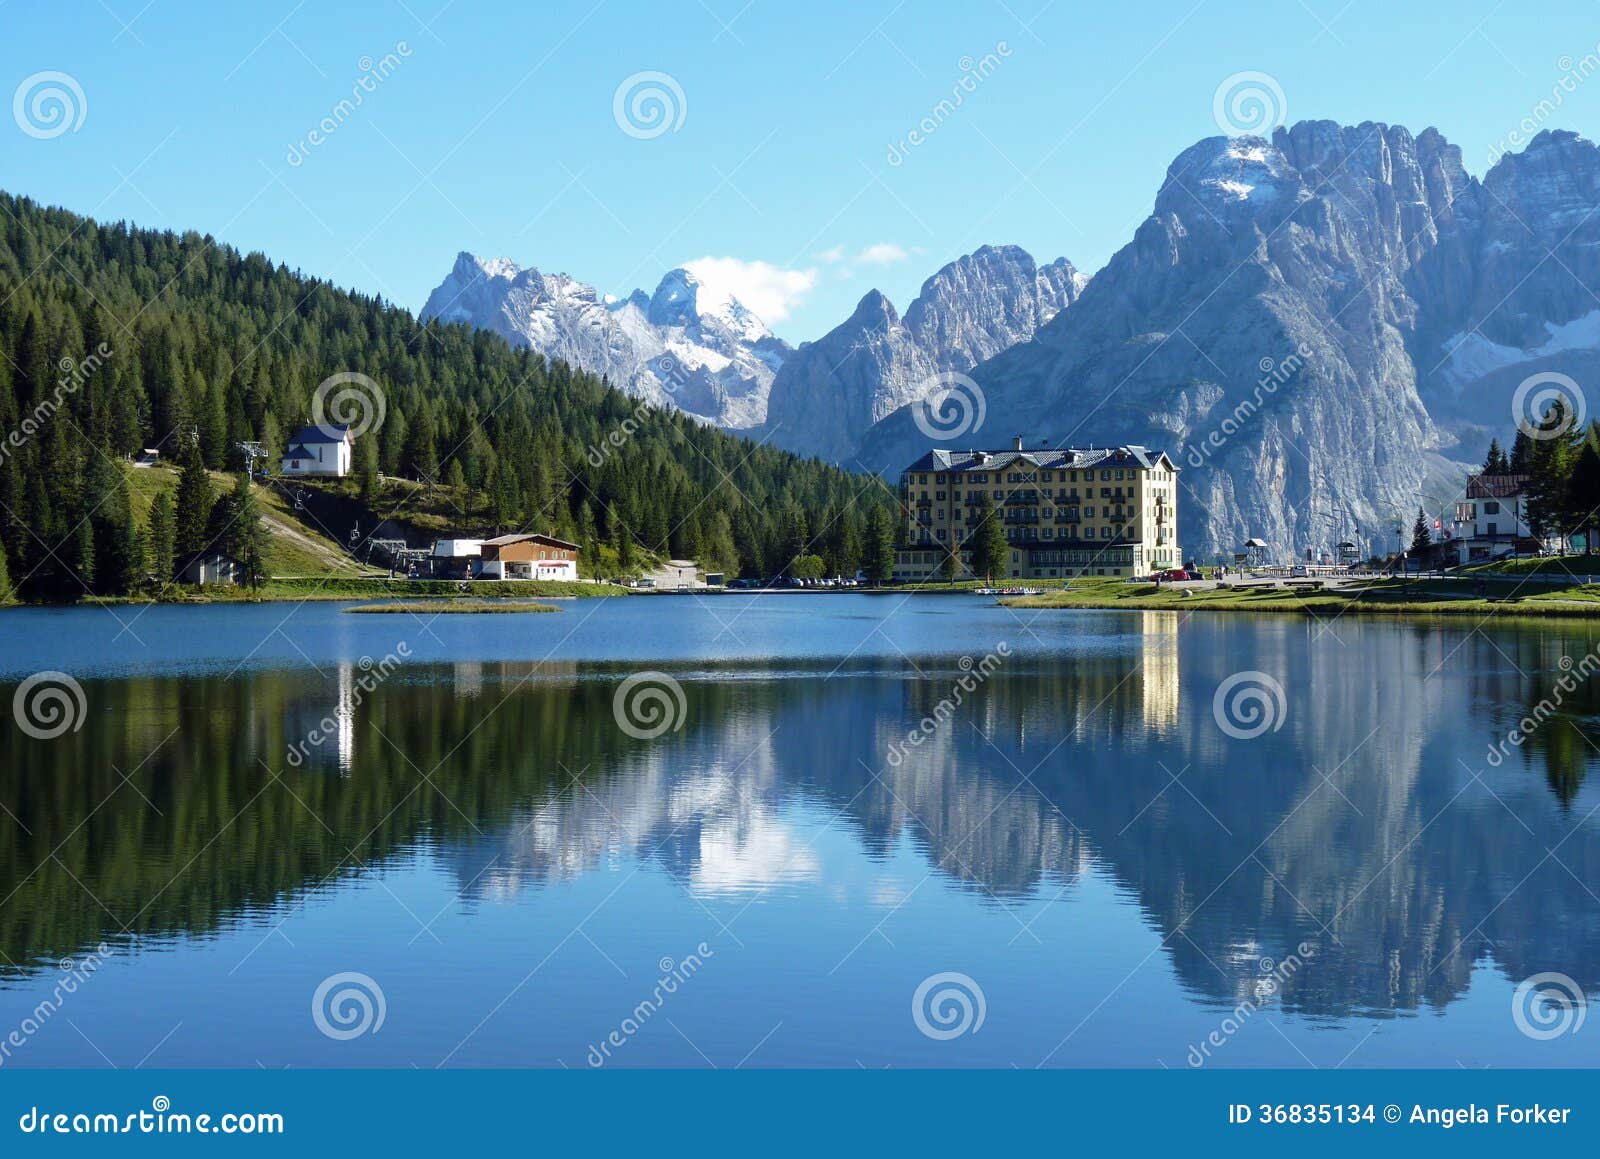 mountain reflections in lake misurina